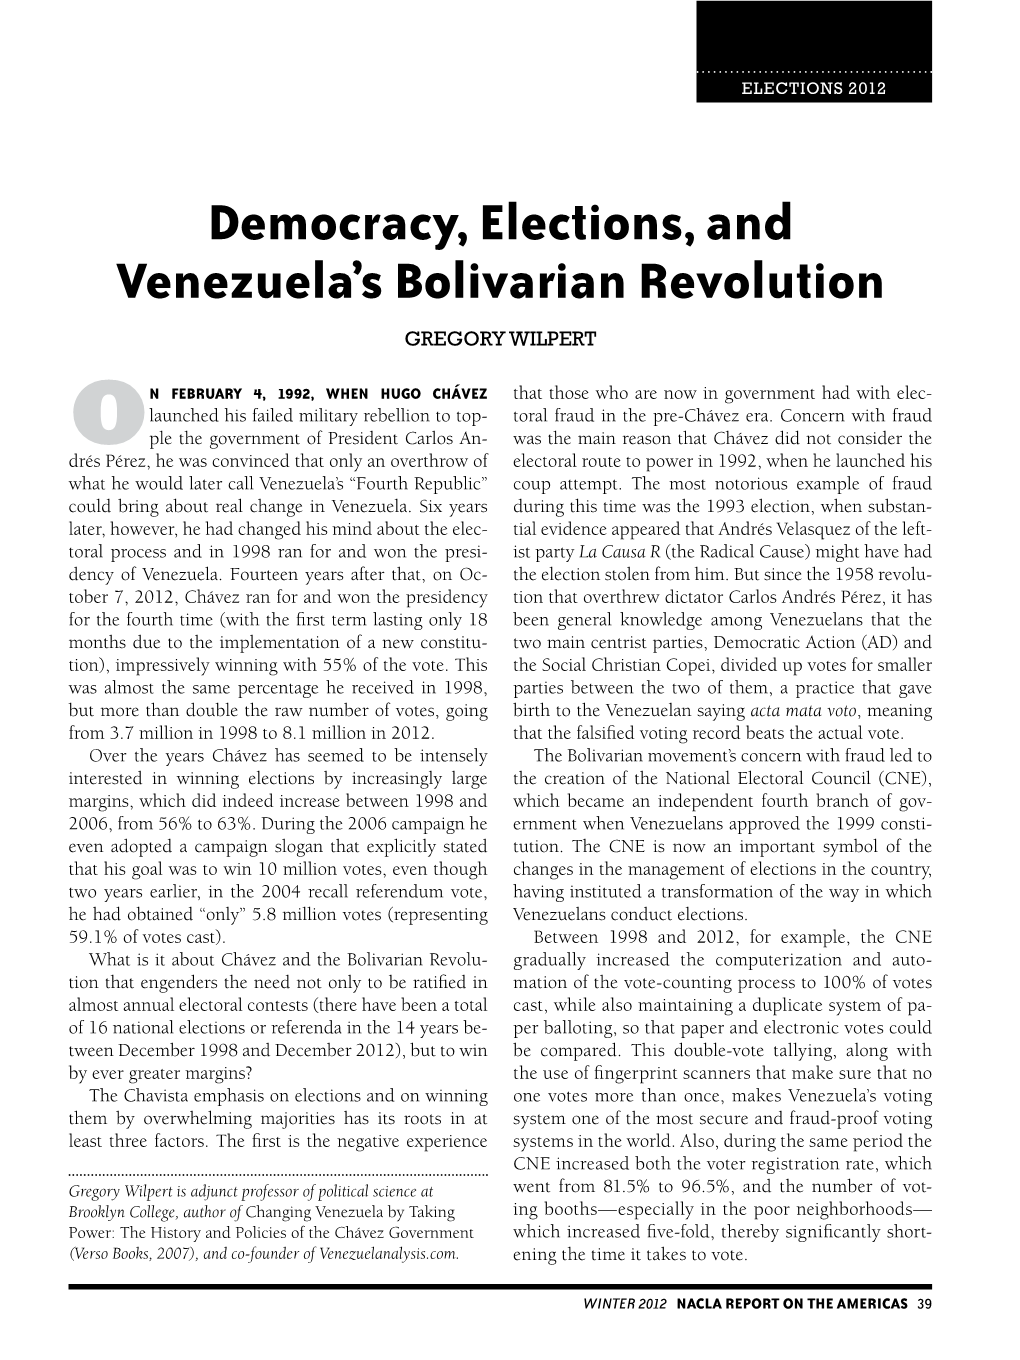 Democracy, Elections, and Venezuela's Bolivarian Revolution